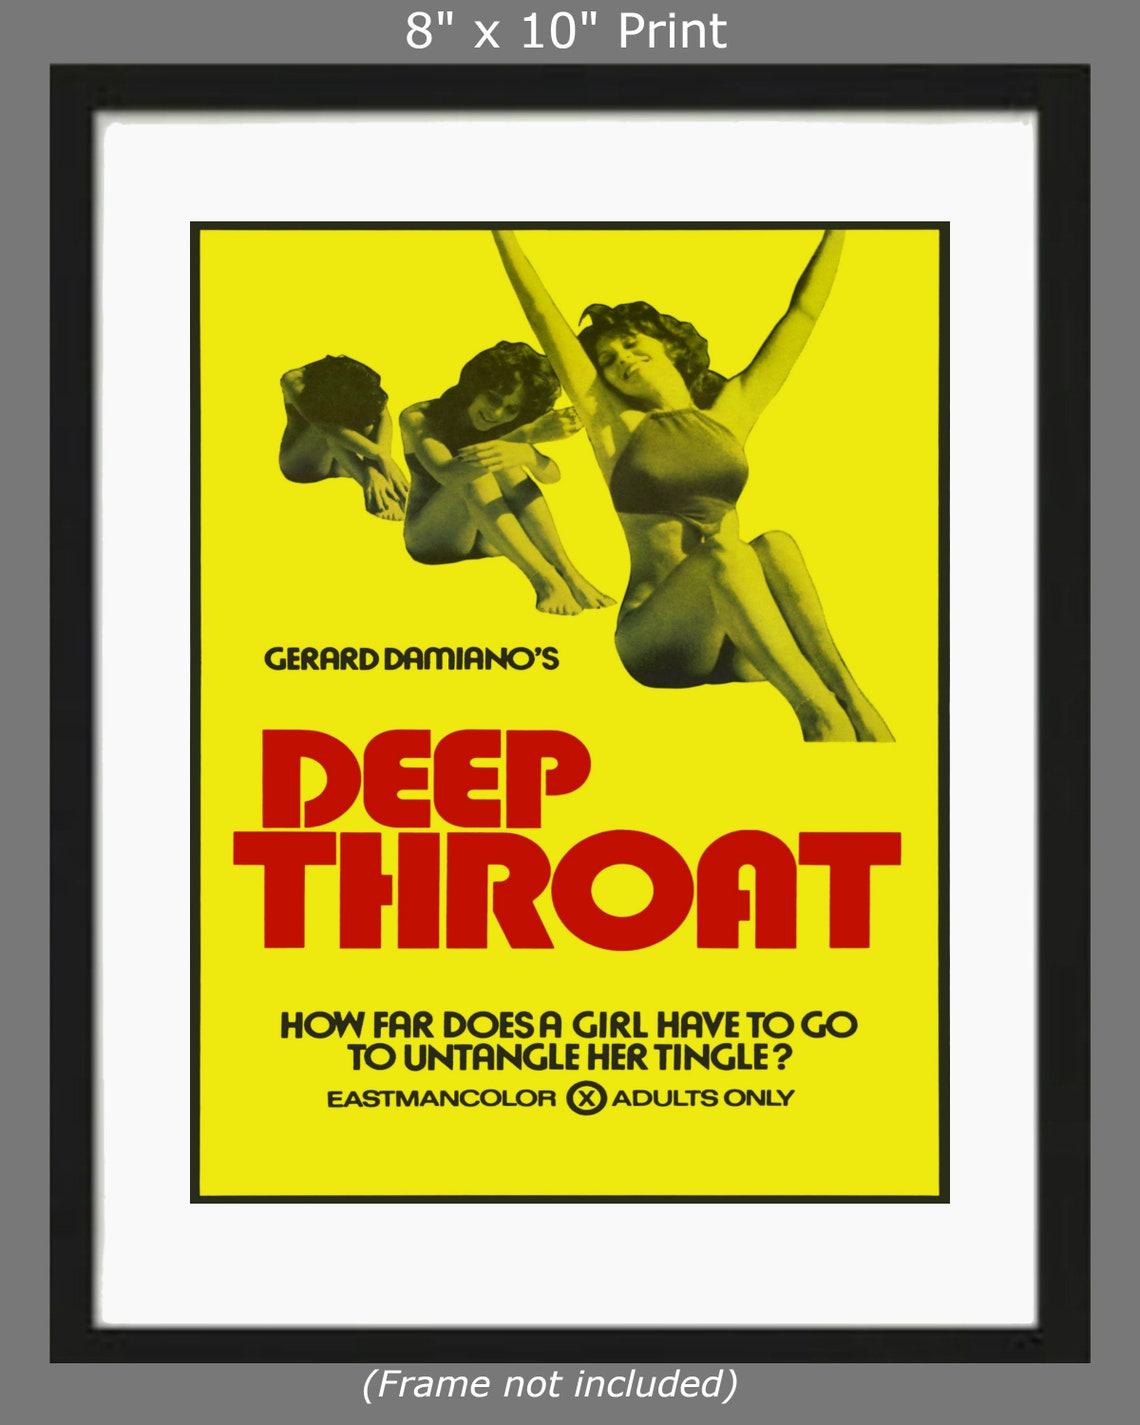 Deep throat movie 1972